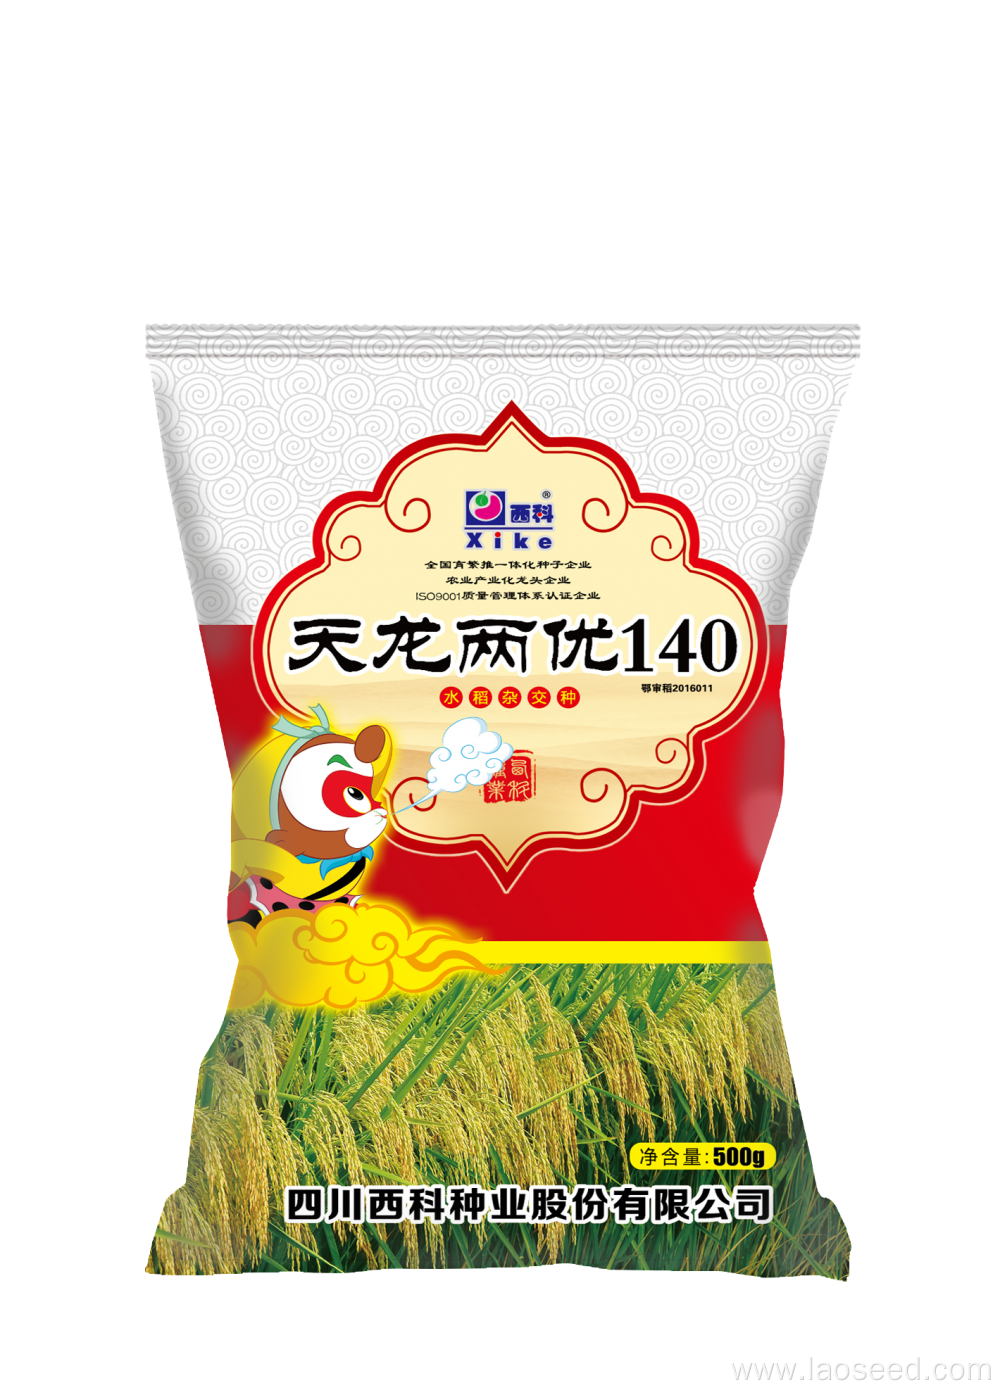 High quality Tianlong Liangyou 140 rice variety